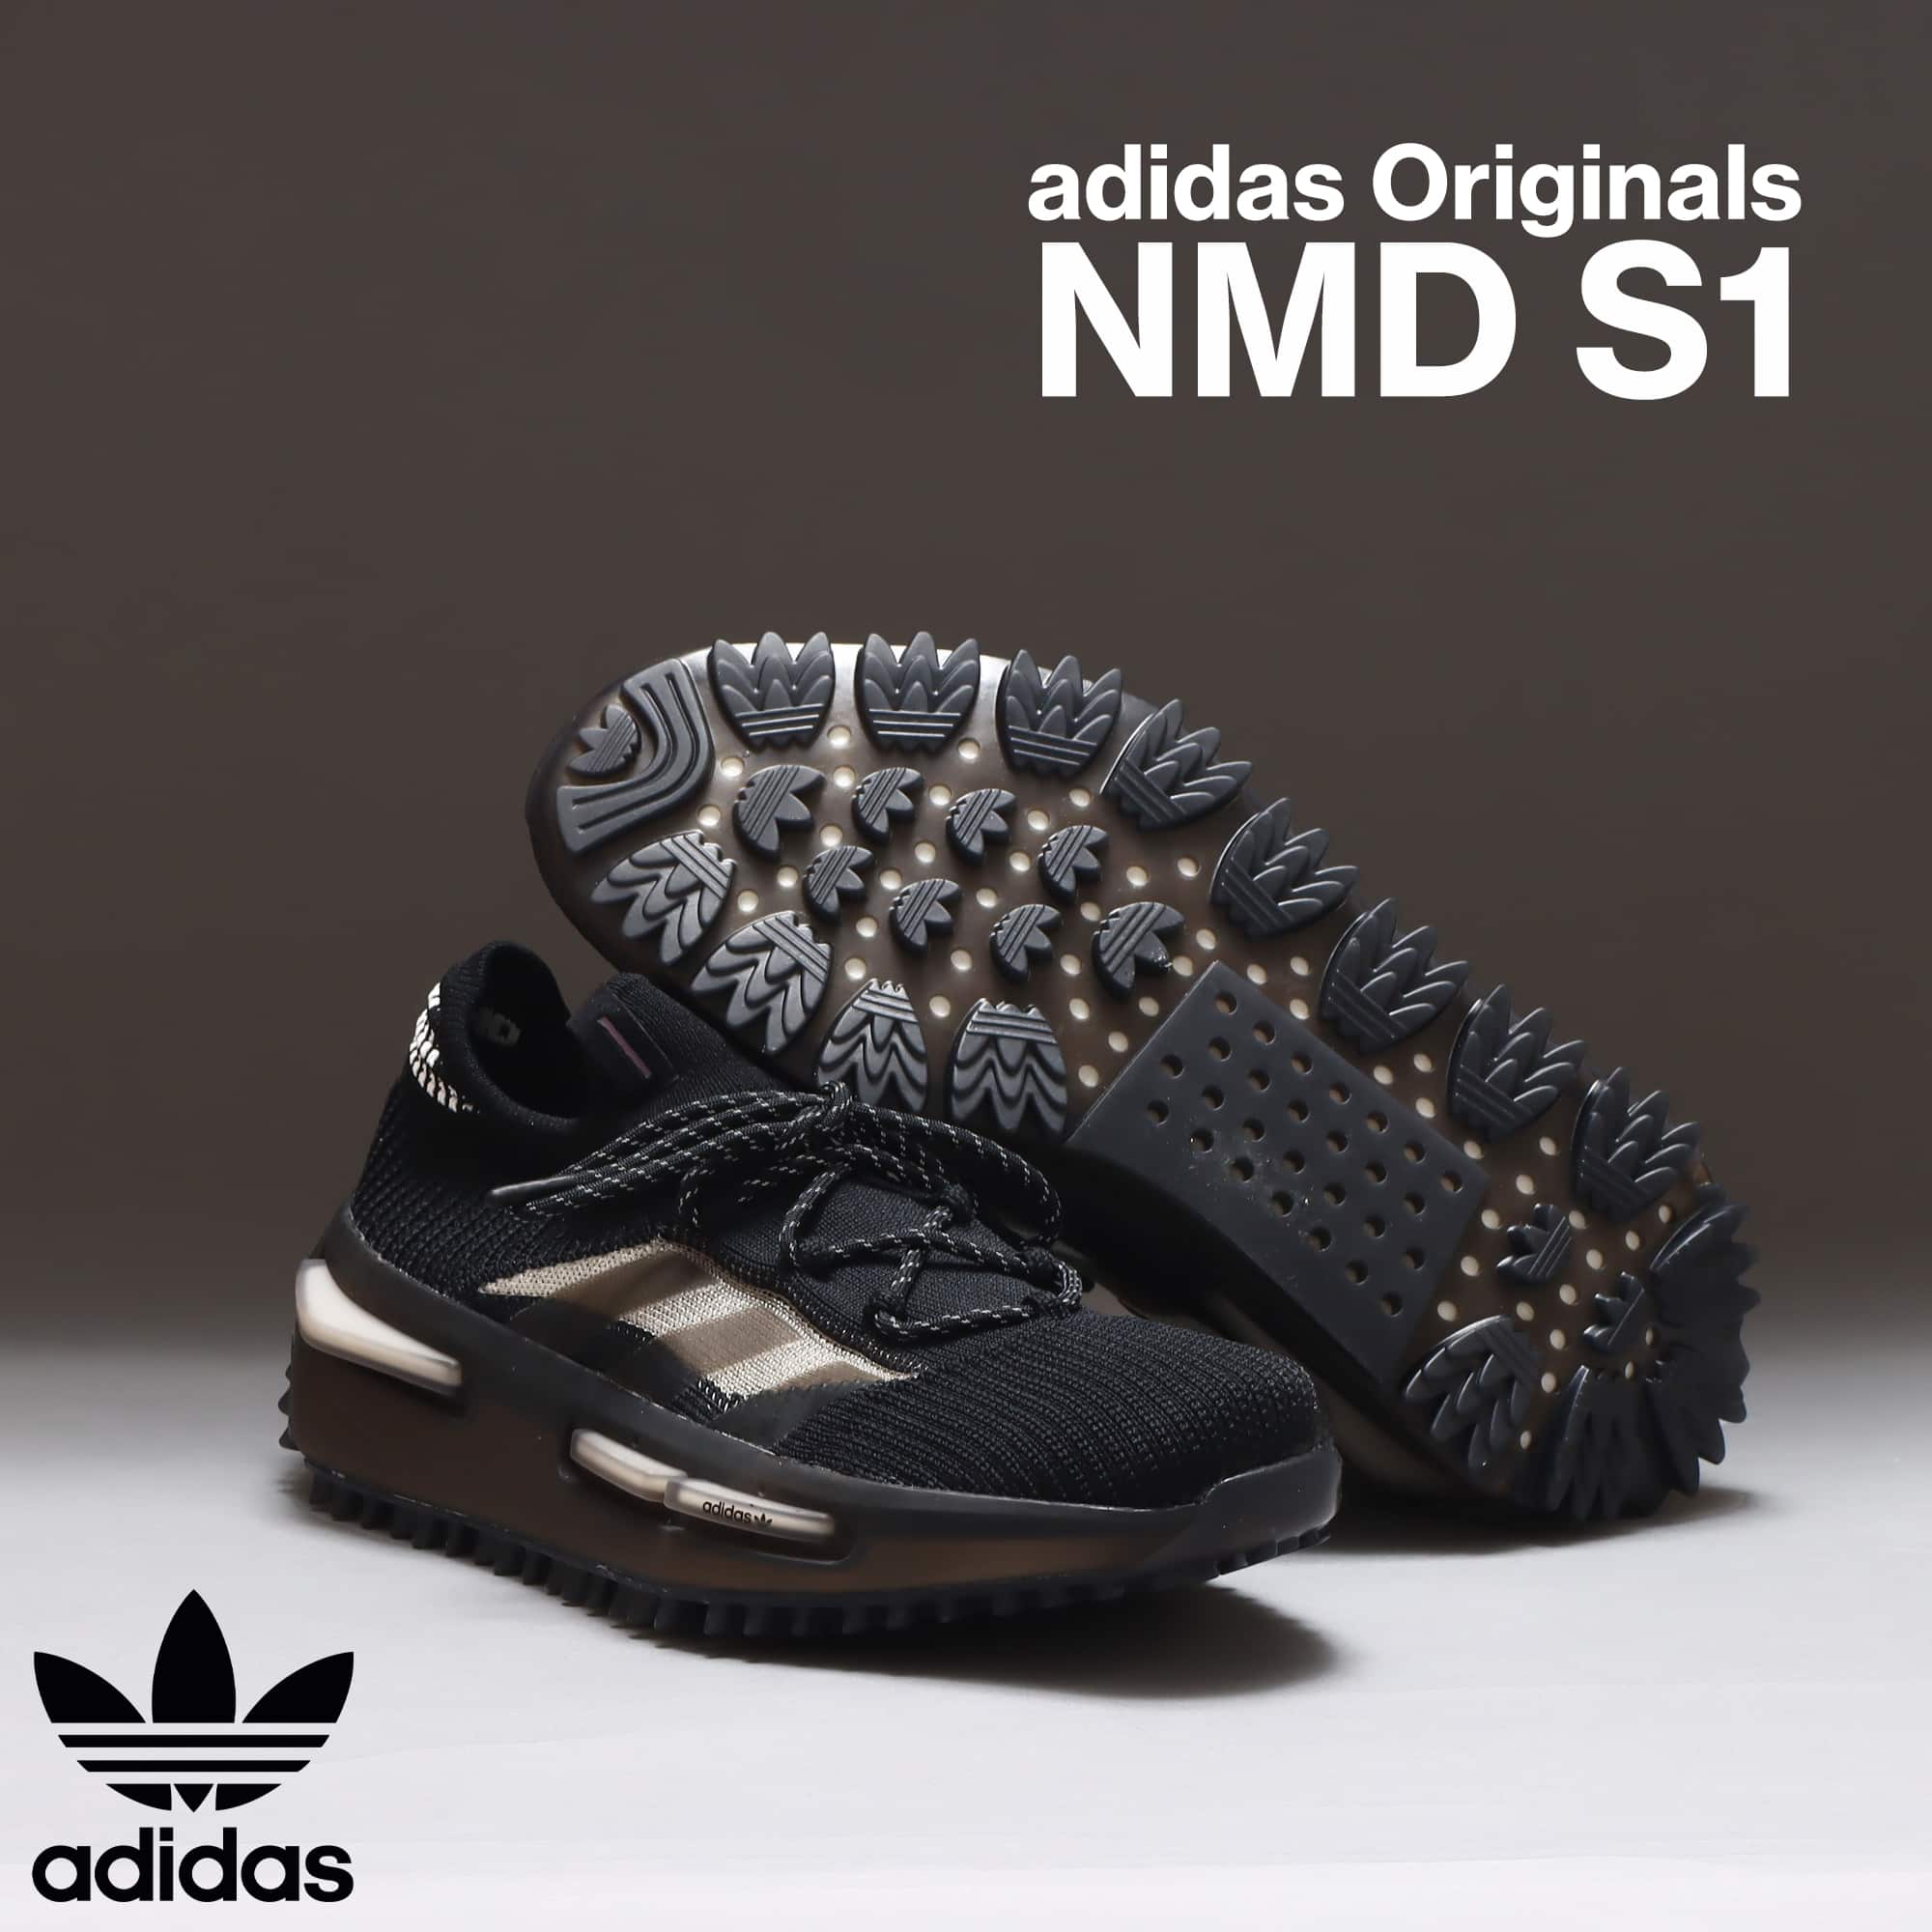 NMD S1 adidas originals【27.5cm】スニーカー